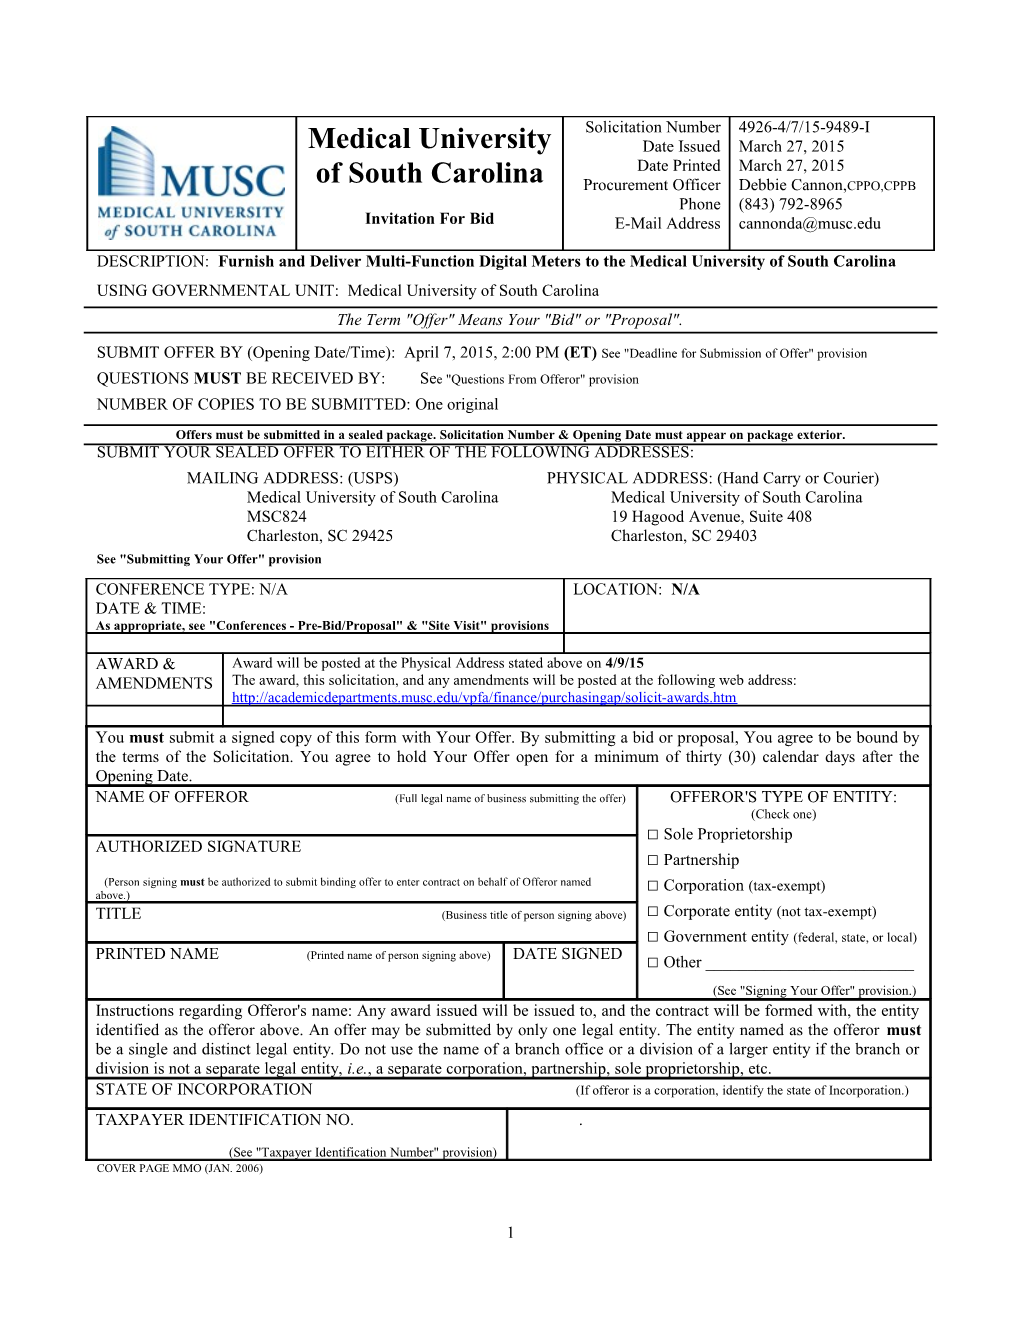 USING GOVERNMENTAL UNIT: Medical University of South Carolina